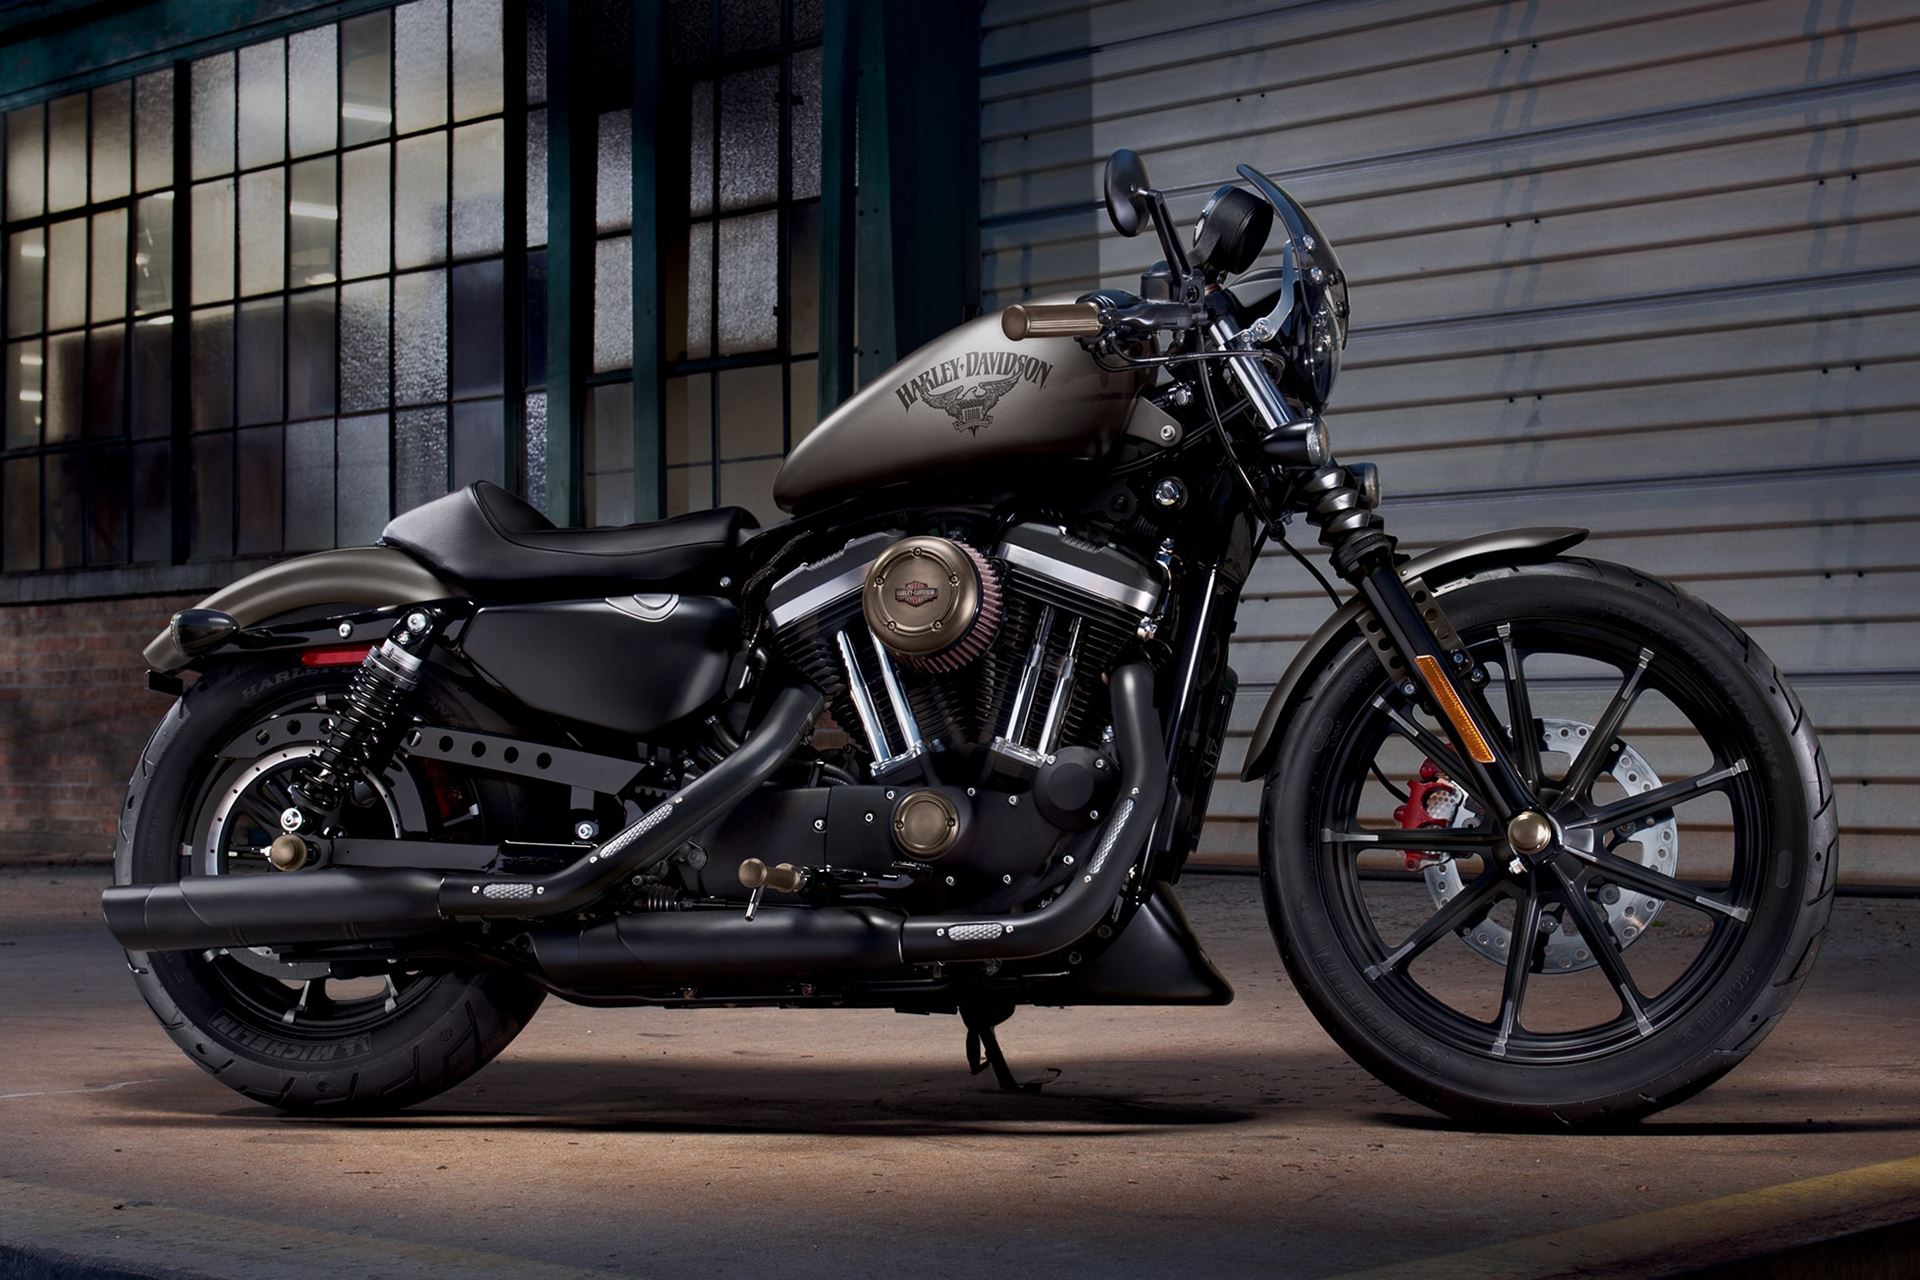 Comparar Harley Davidson Forty Eight Com Harley Davidson Iron 883 Andar De Moto